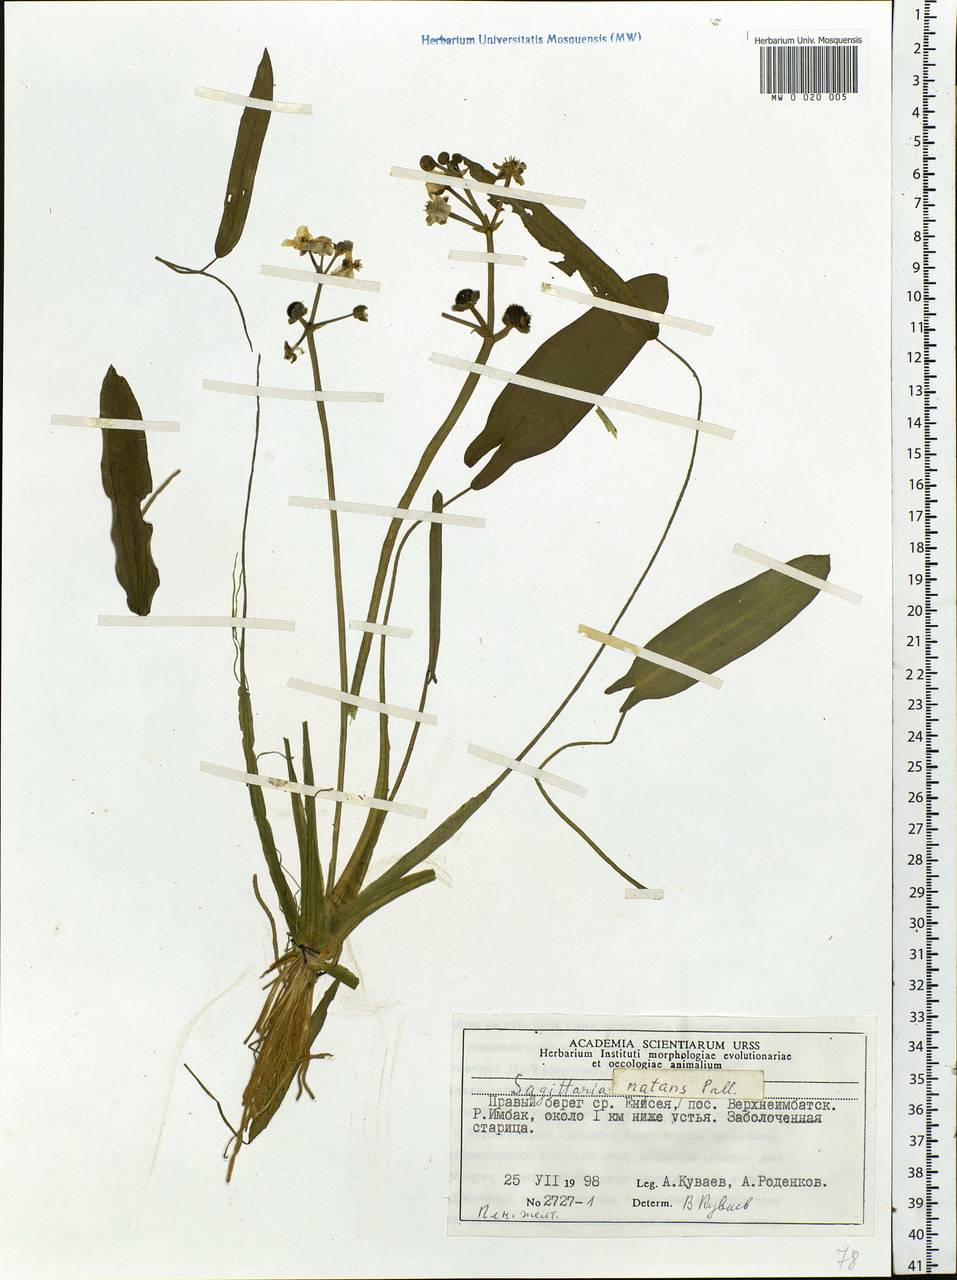 Sagittaria natans Pall., Siberia, Central Siberia (S3) (Russia)